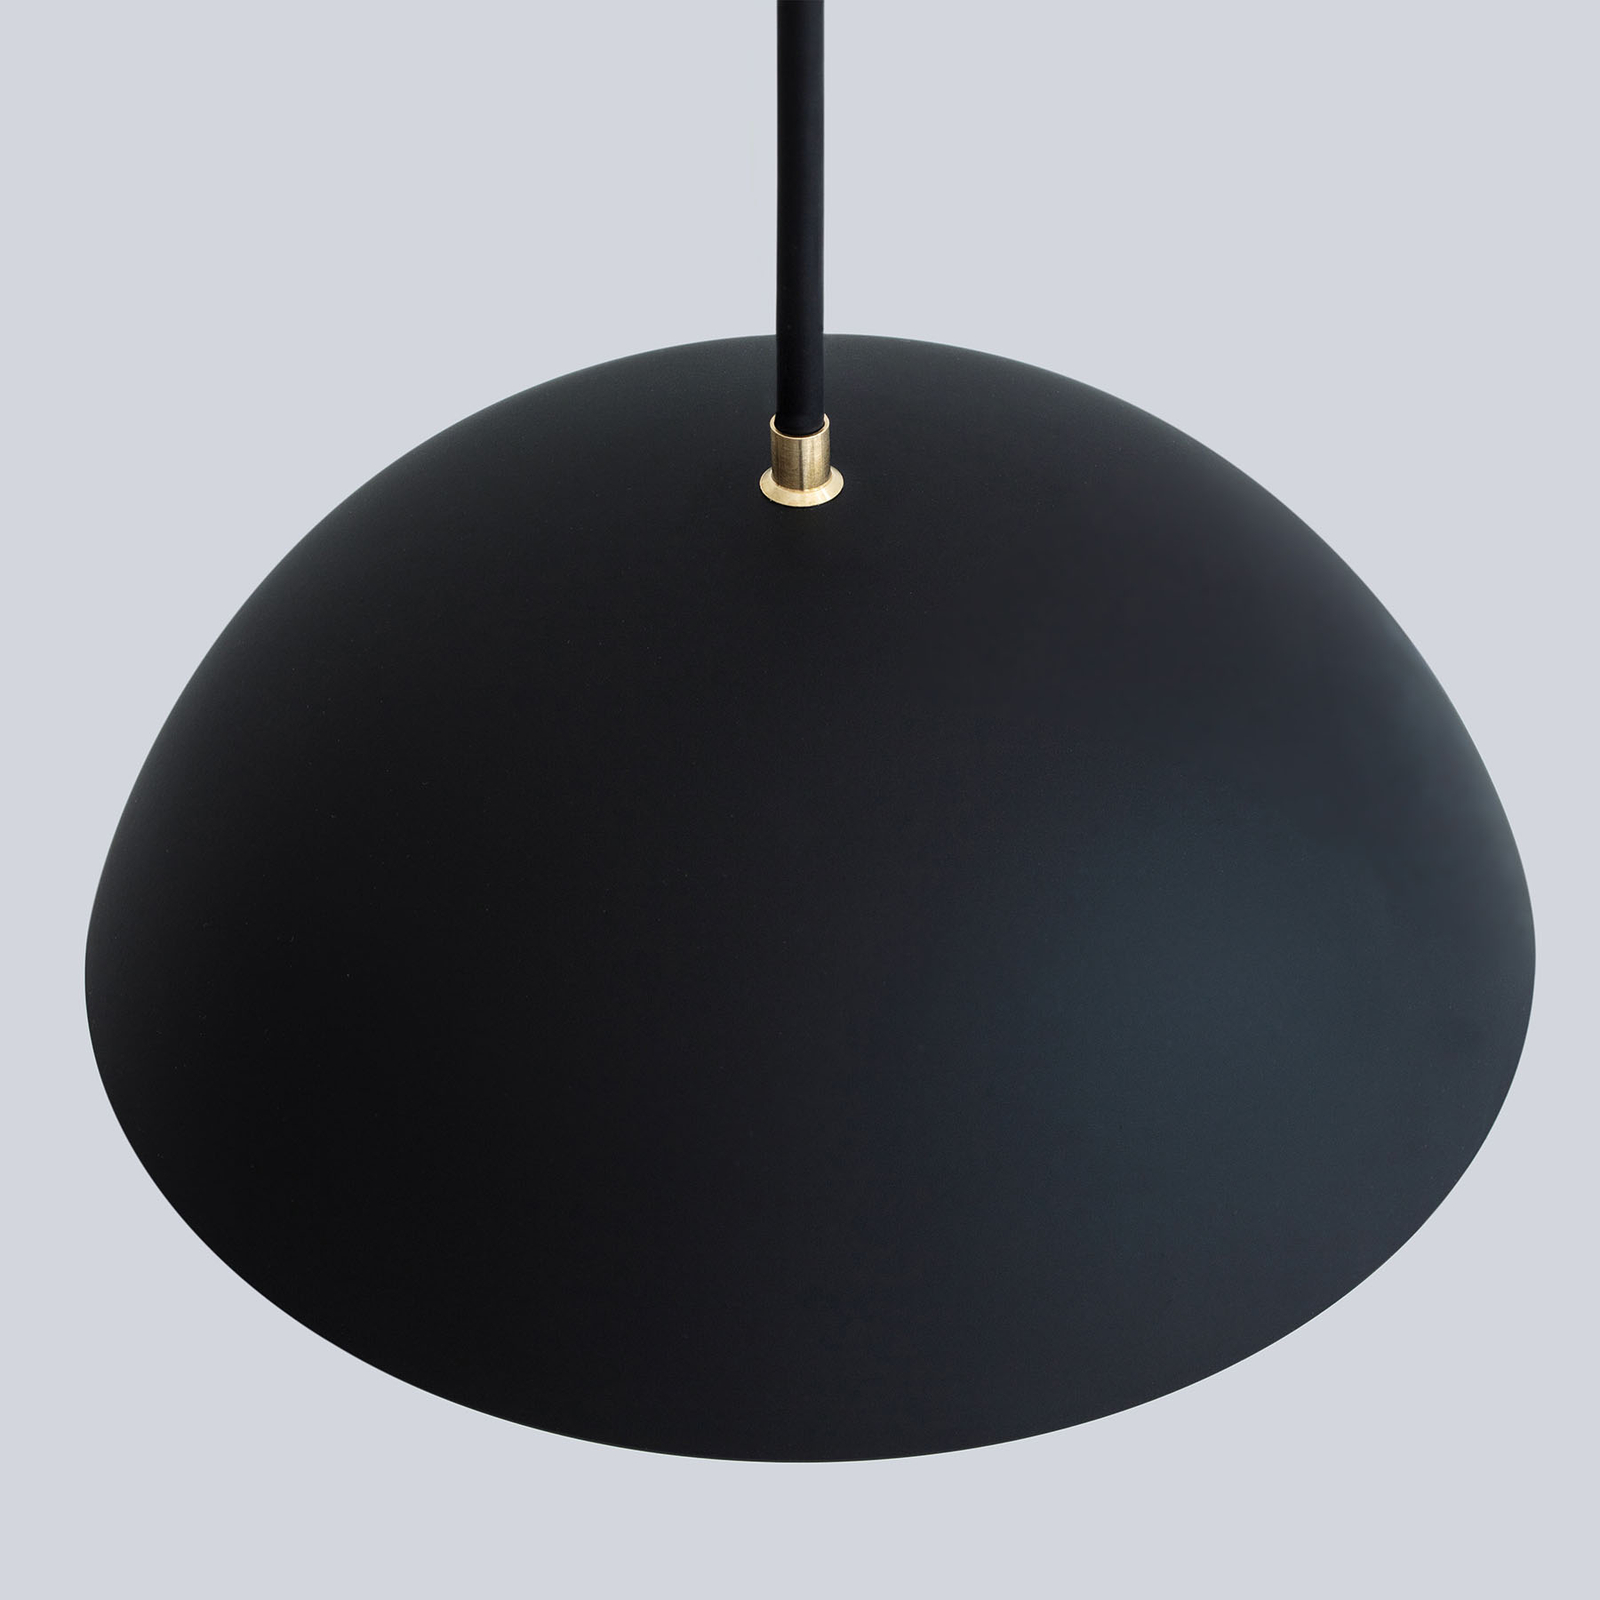 NYTA Pong Plafond LED hanglamp, snoerlengte 3m